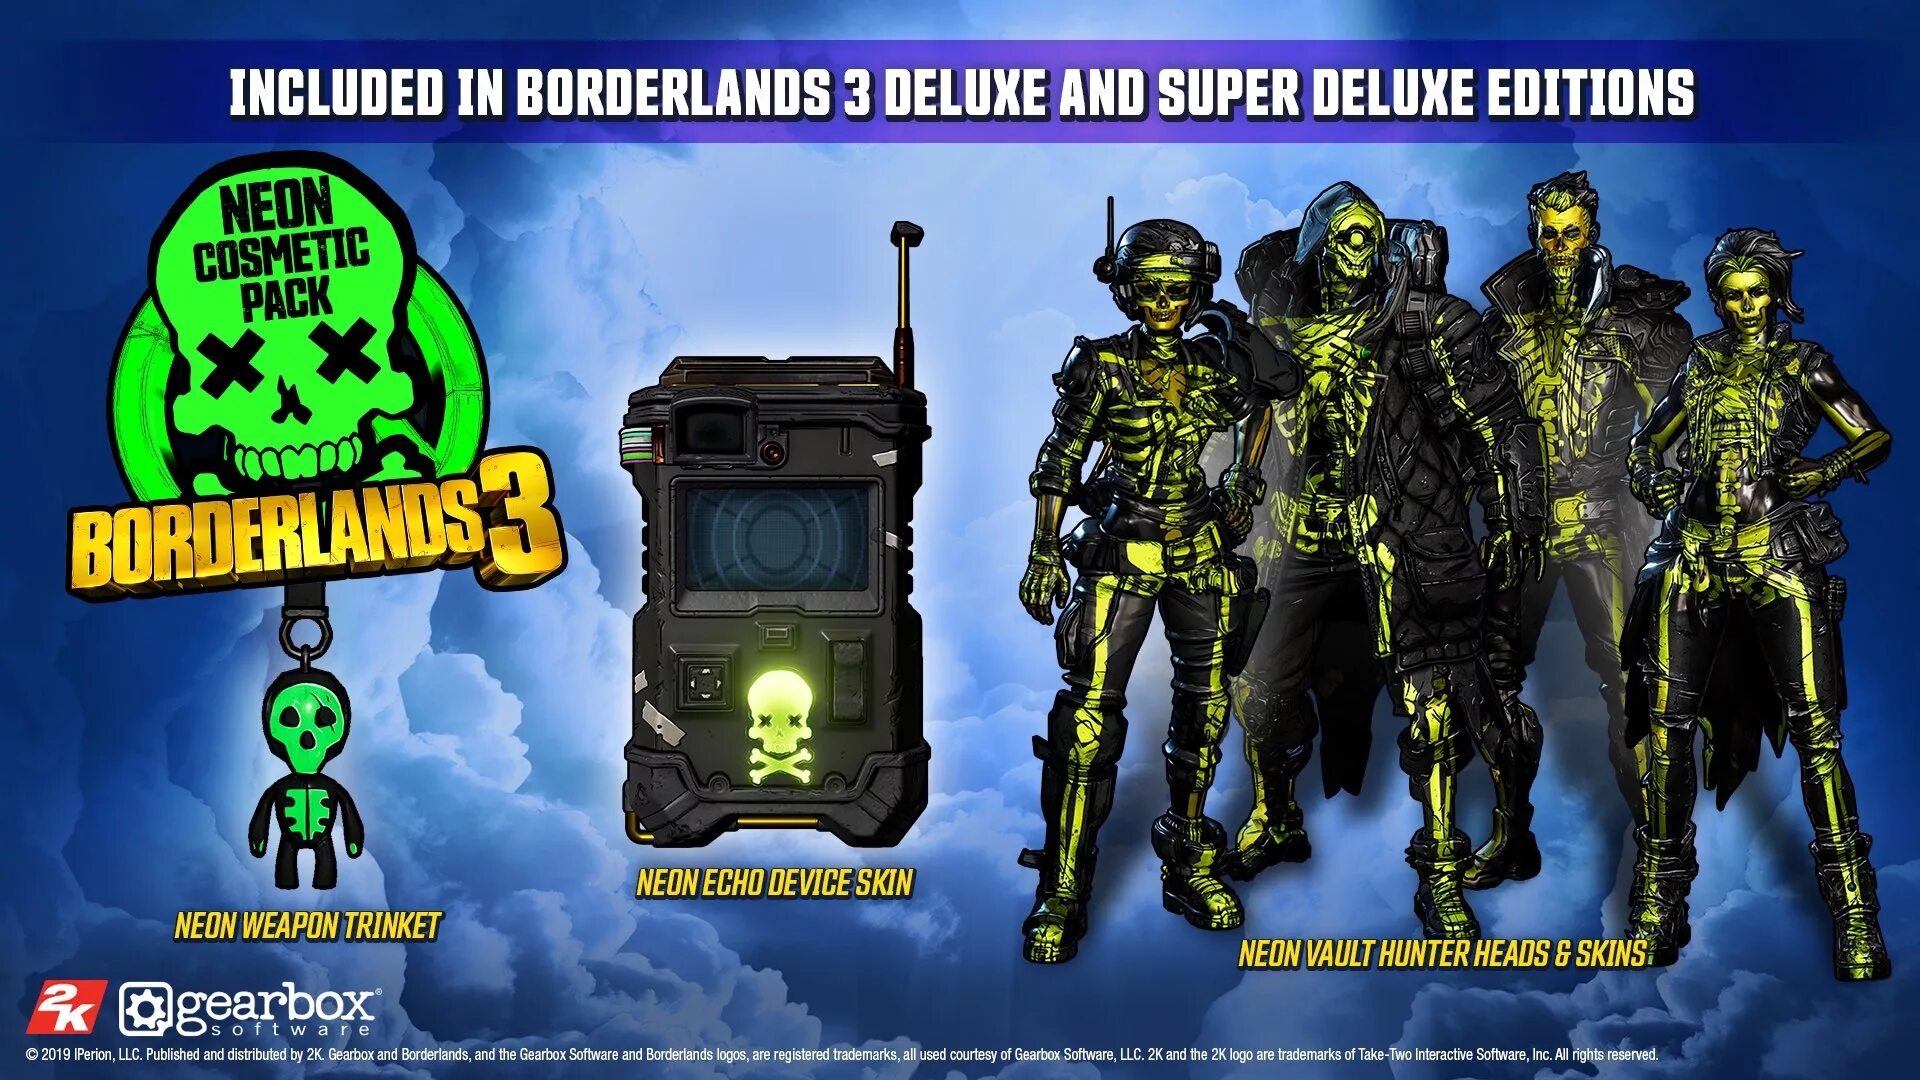 Borderlands 3 super deluxe edition. Косметический набор неон Borderlands 3. Бордерлендс 3 Deluxe Edition. Косметический набор ретро Borderlands 3. Жопец Borderlands 3.